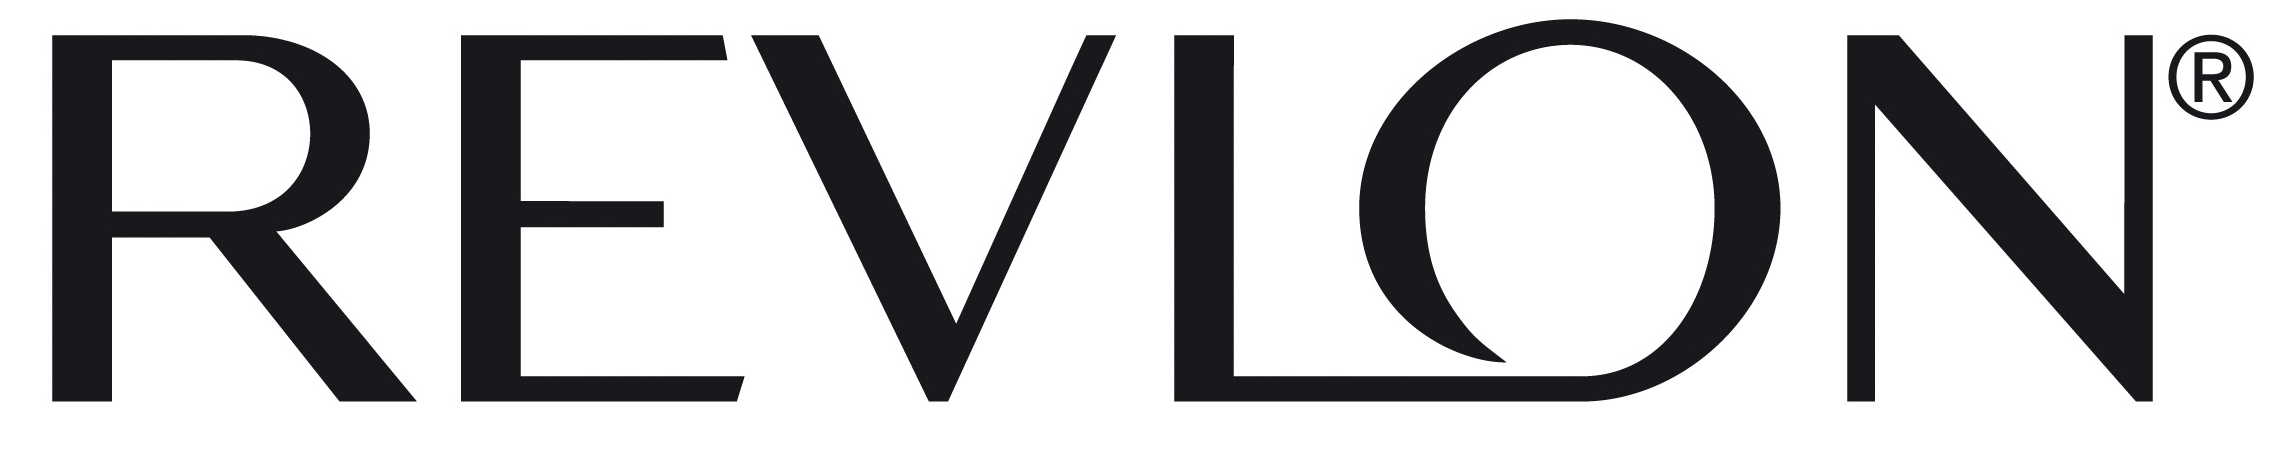 Revlon Logo - Revlon